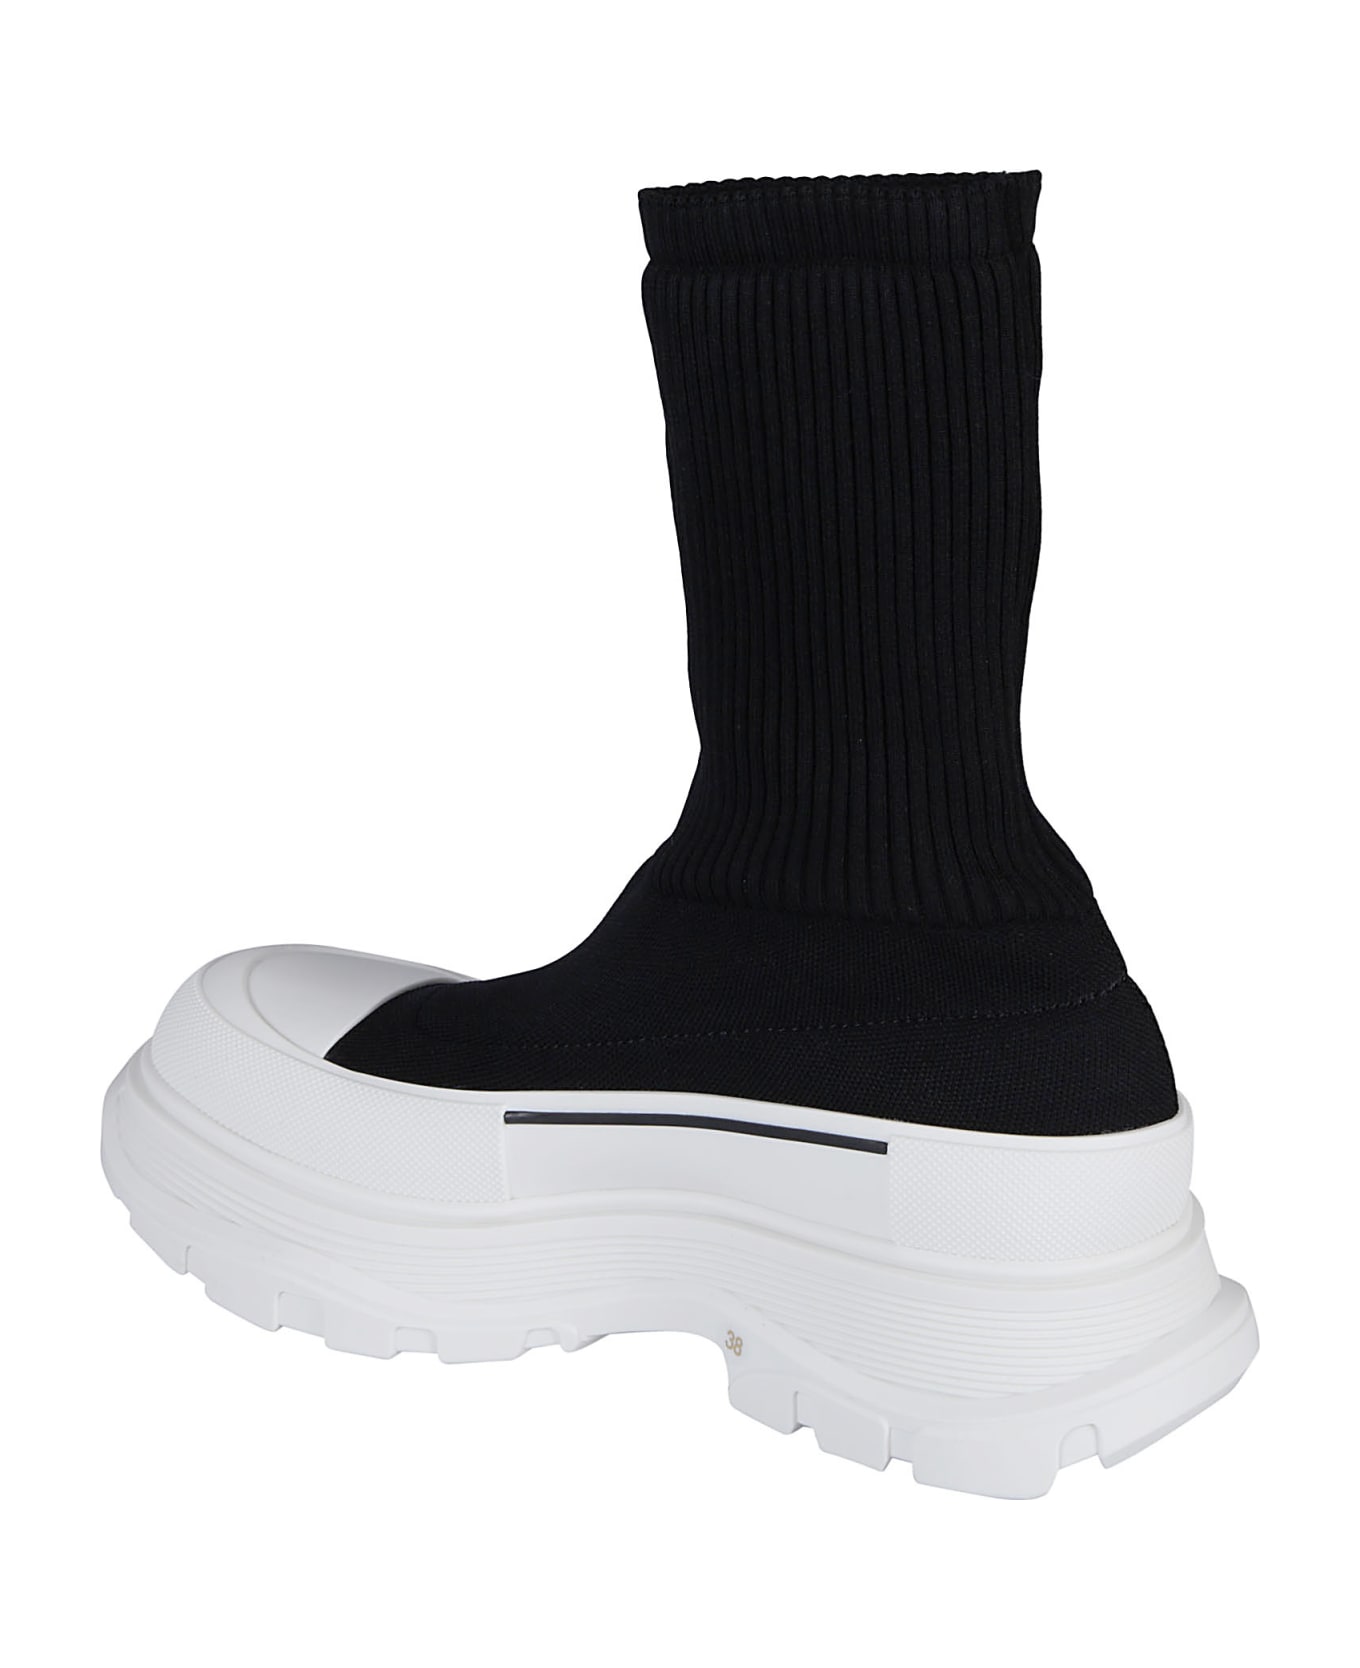 Alexander McQueen Sock Boots - Black/White